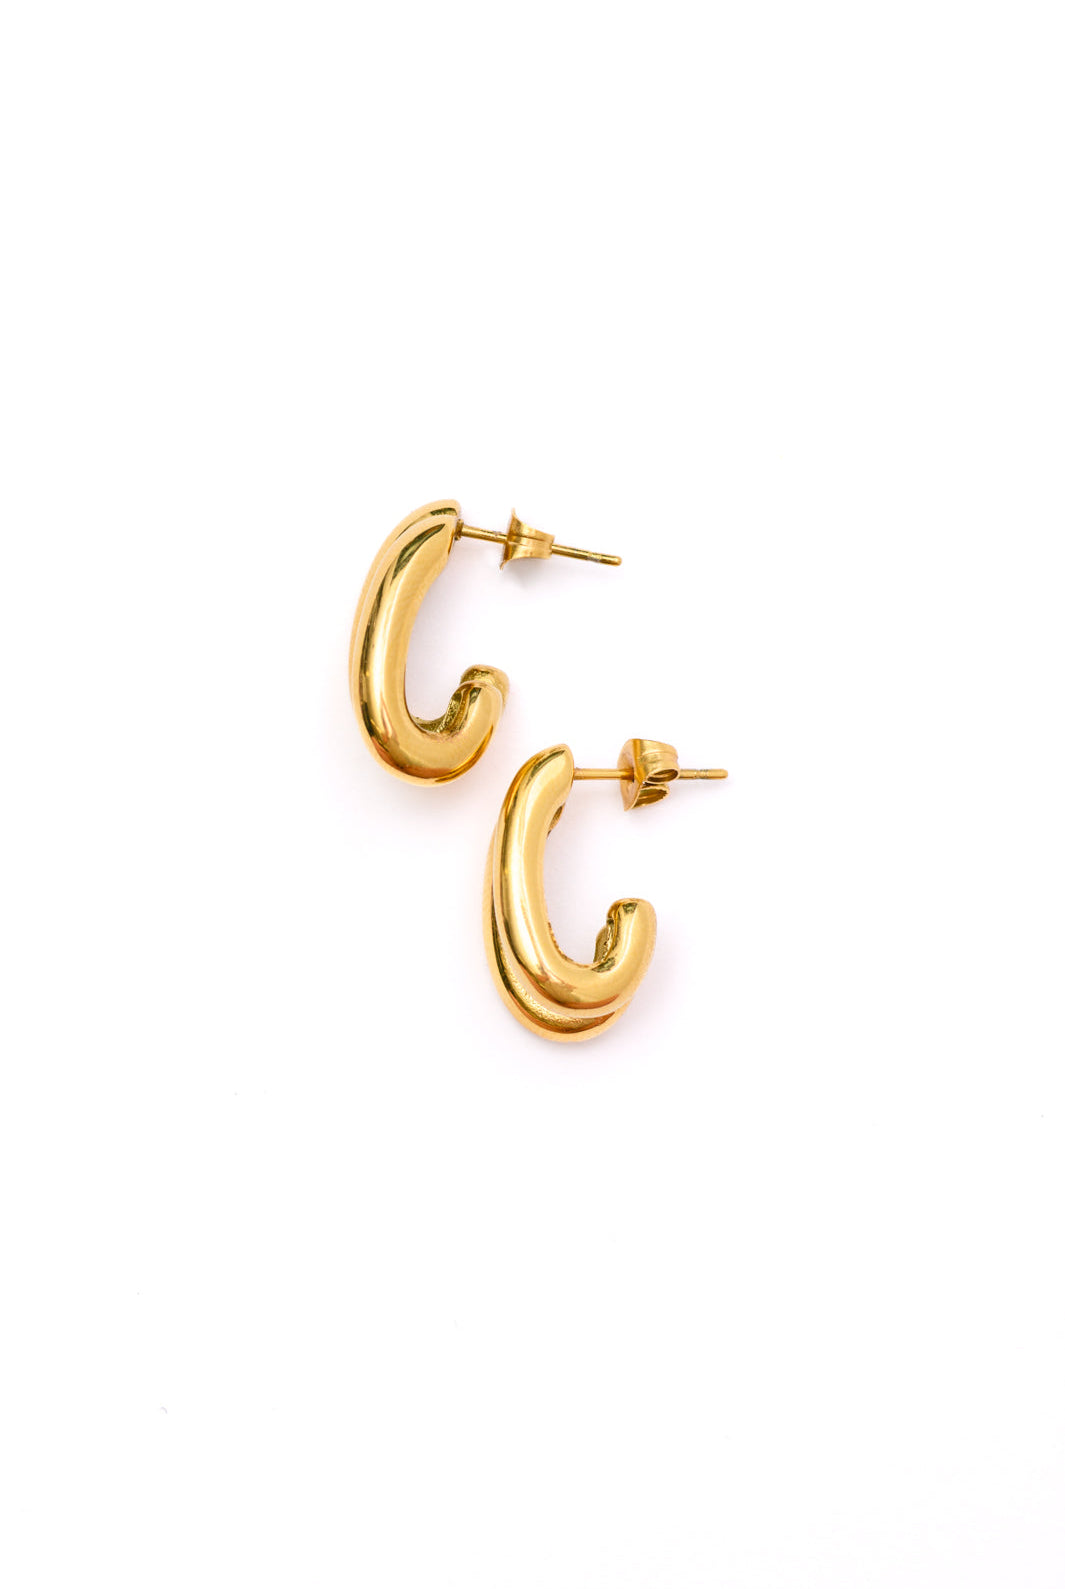 Pushing Limits Gold Plated Earrings-Earrings-Ave Shops-Urban Threadz Boutique, Women's Fashion Boutique in Saugatuck, MI